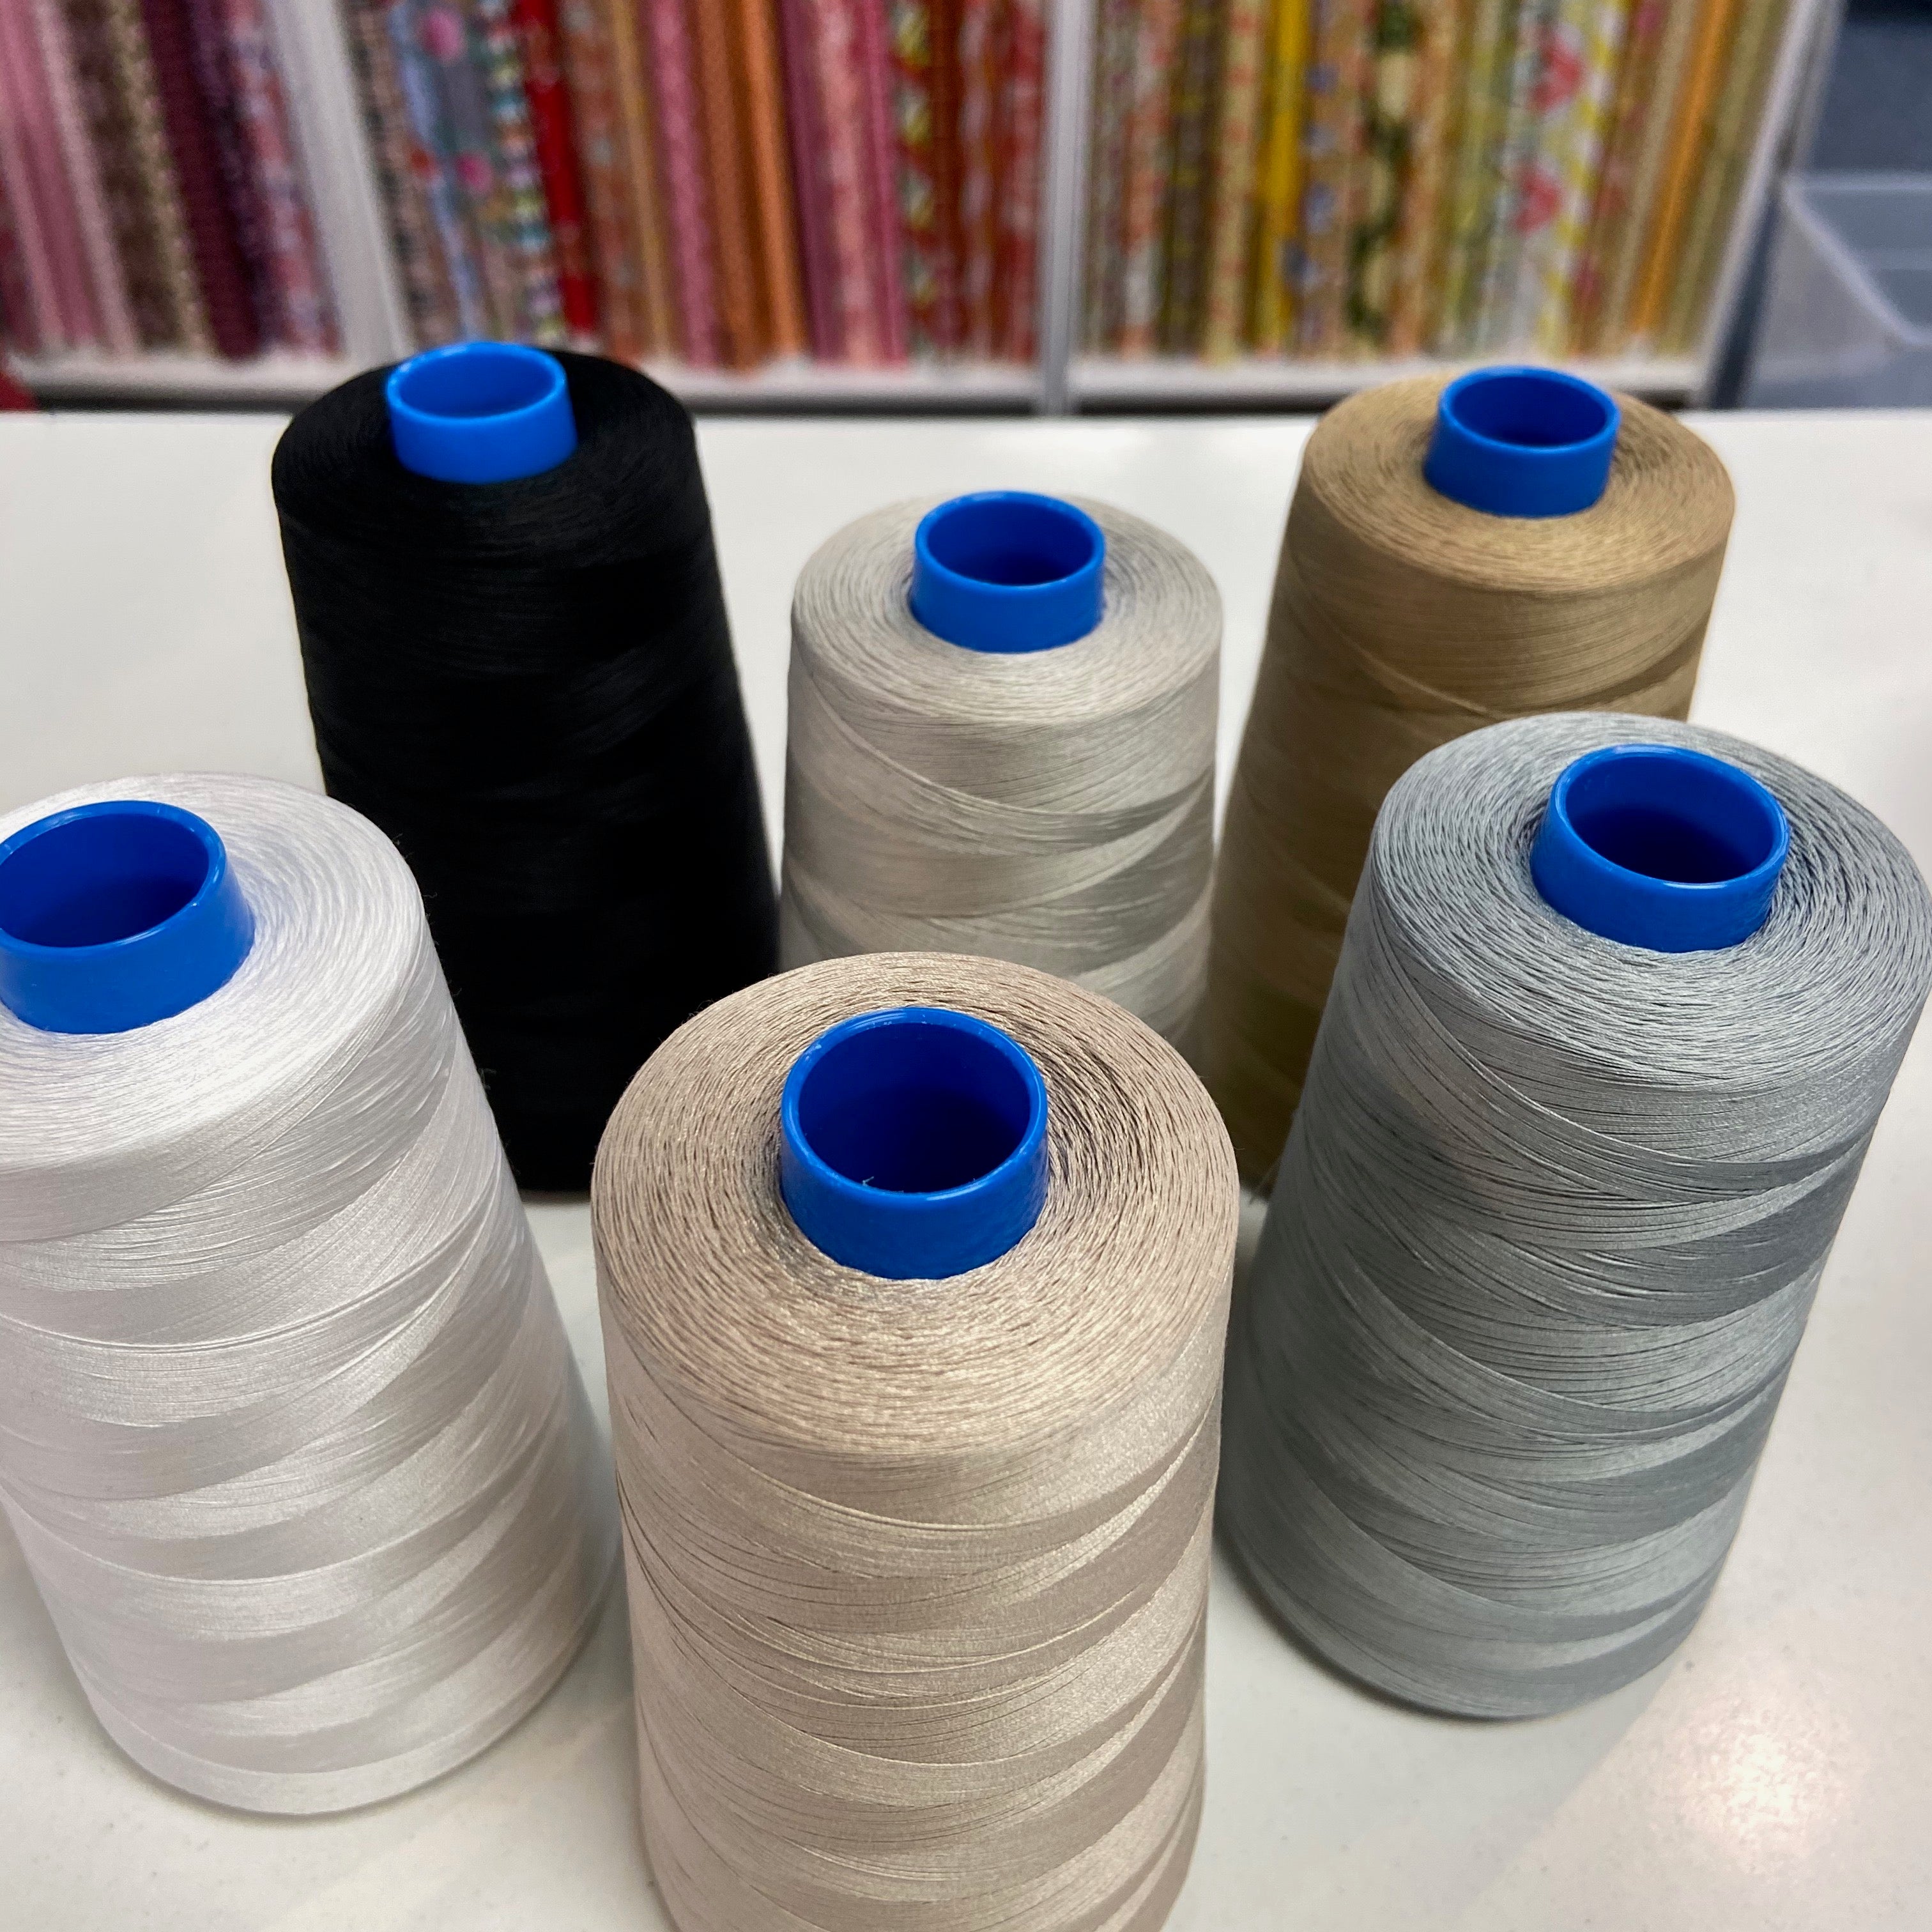 Aurifil Mako 50 wt Cotton Thread - Light Beige (2310) - Bundle of 3 Spools